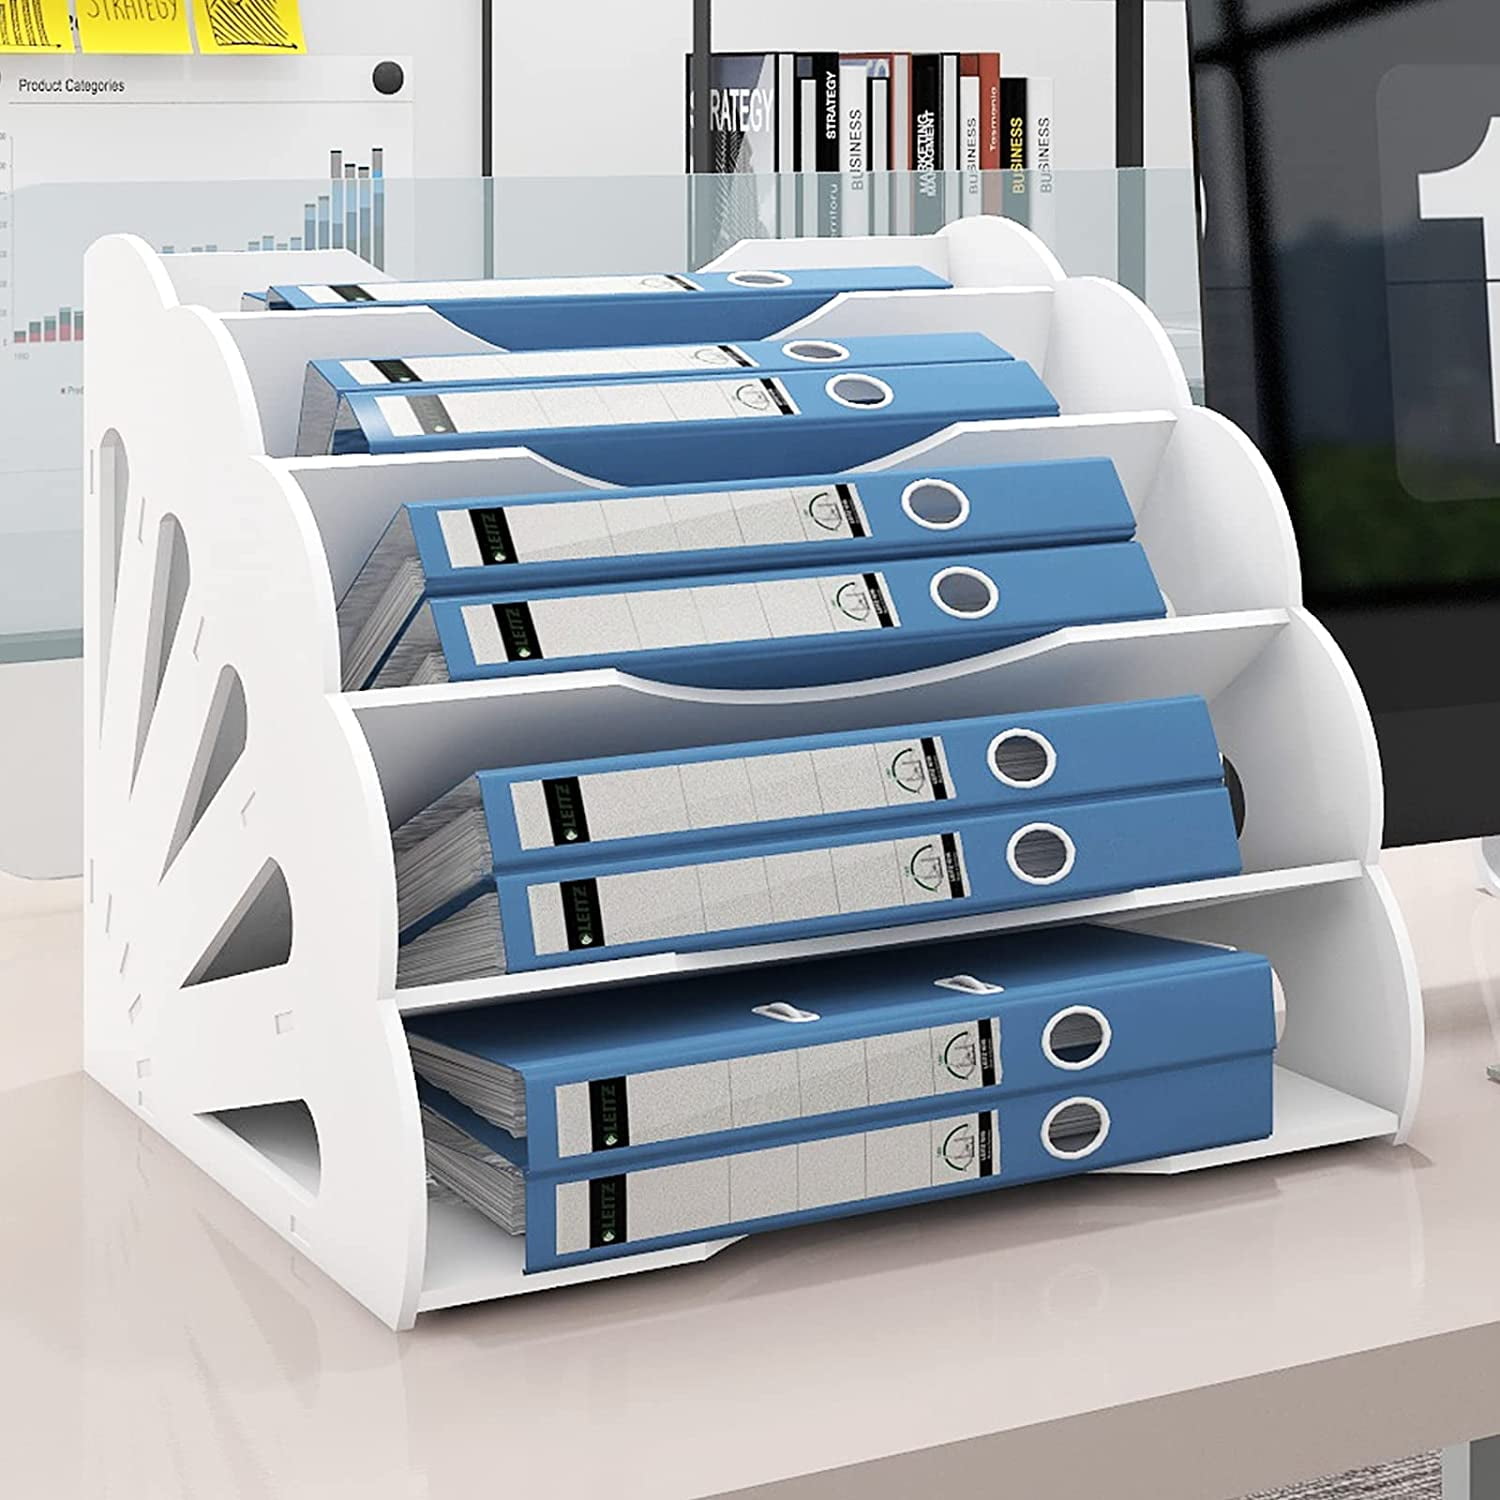 Natwind Office Paper Organizer for Desk Desktop Letter Tray & A4